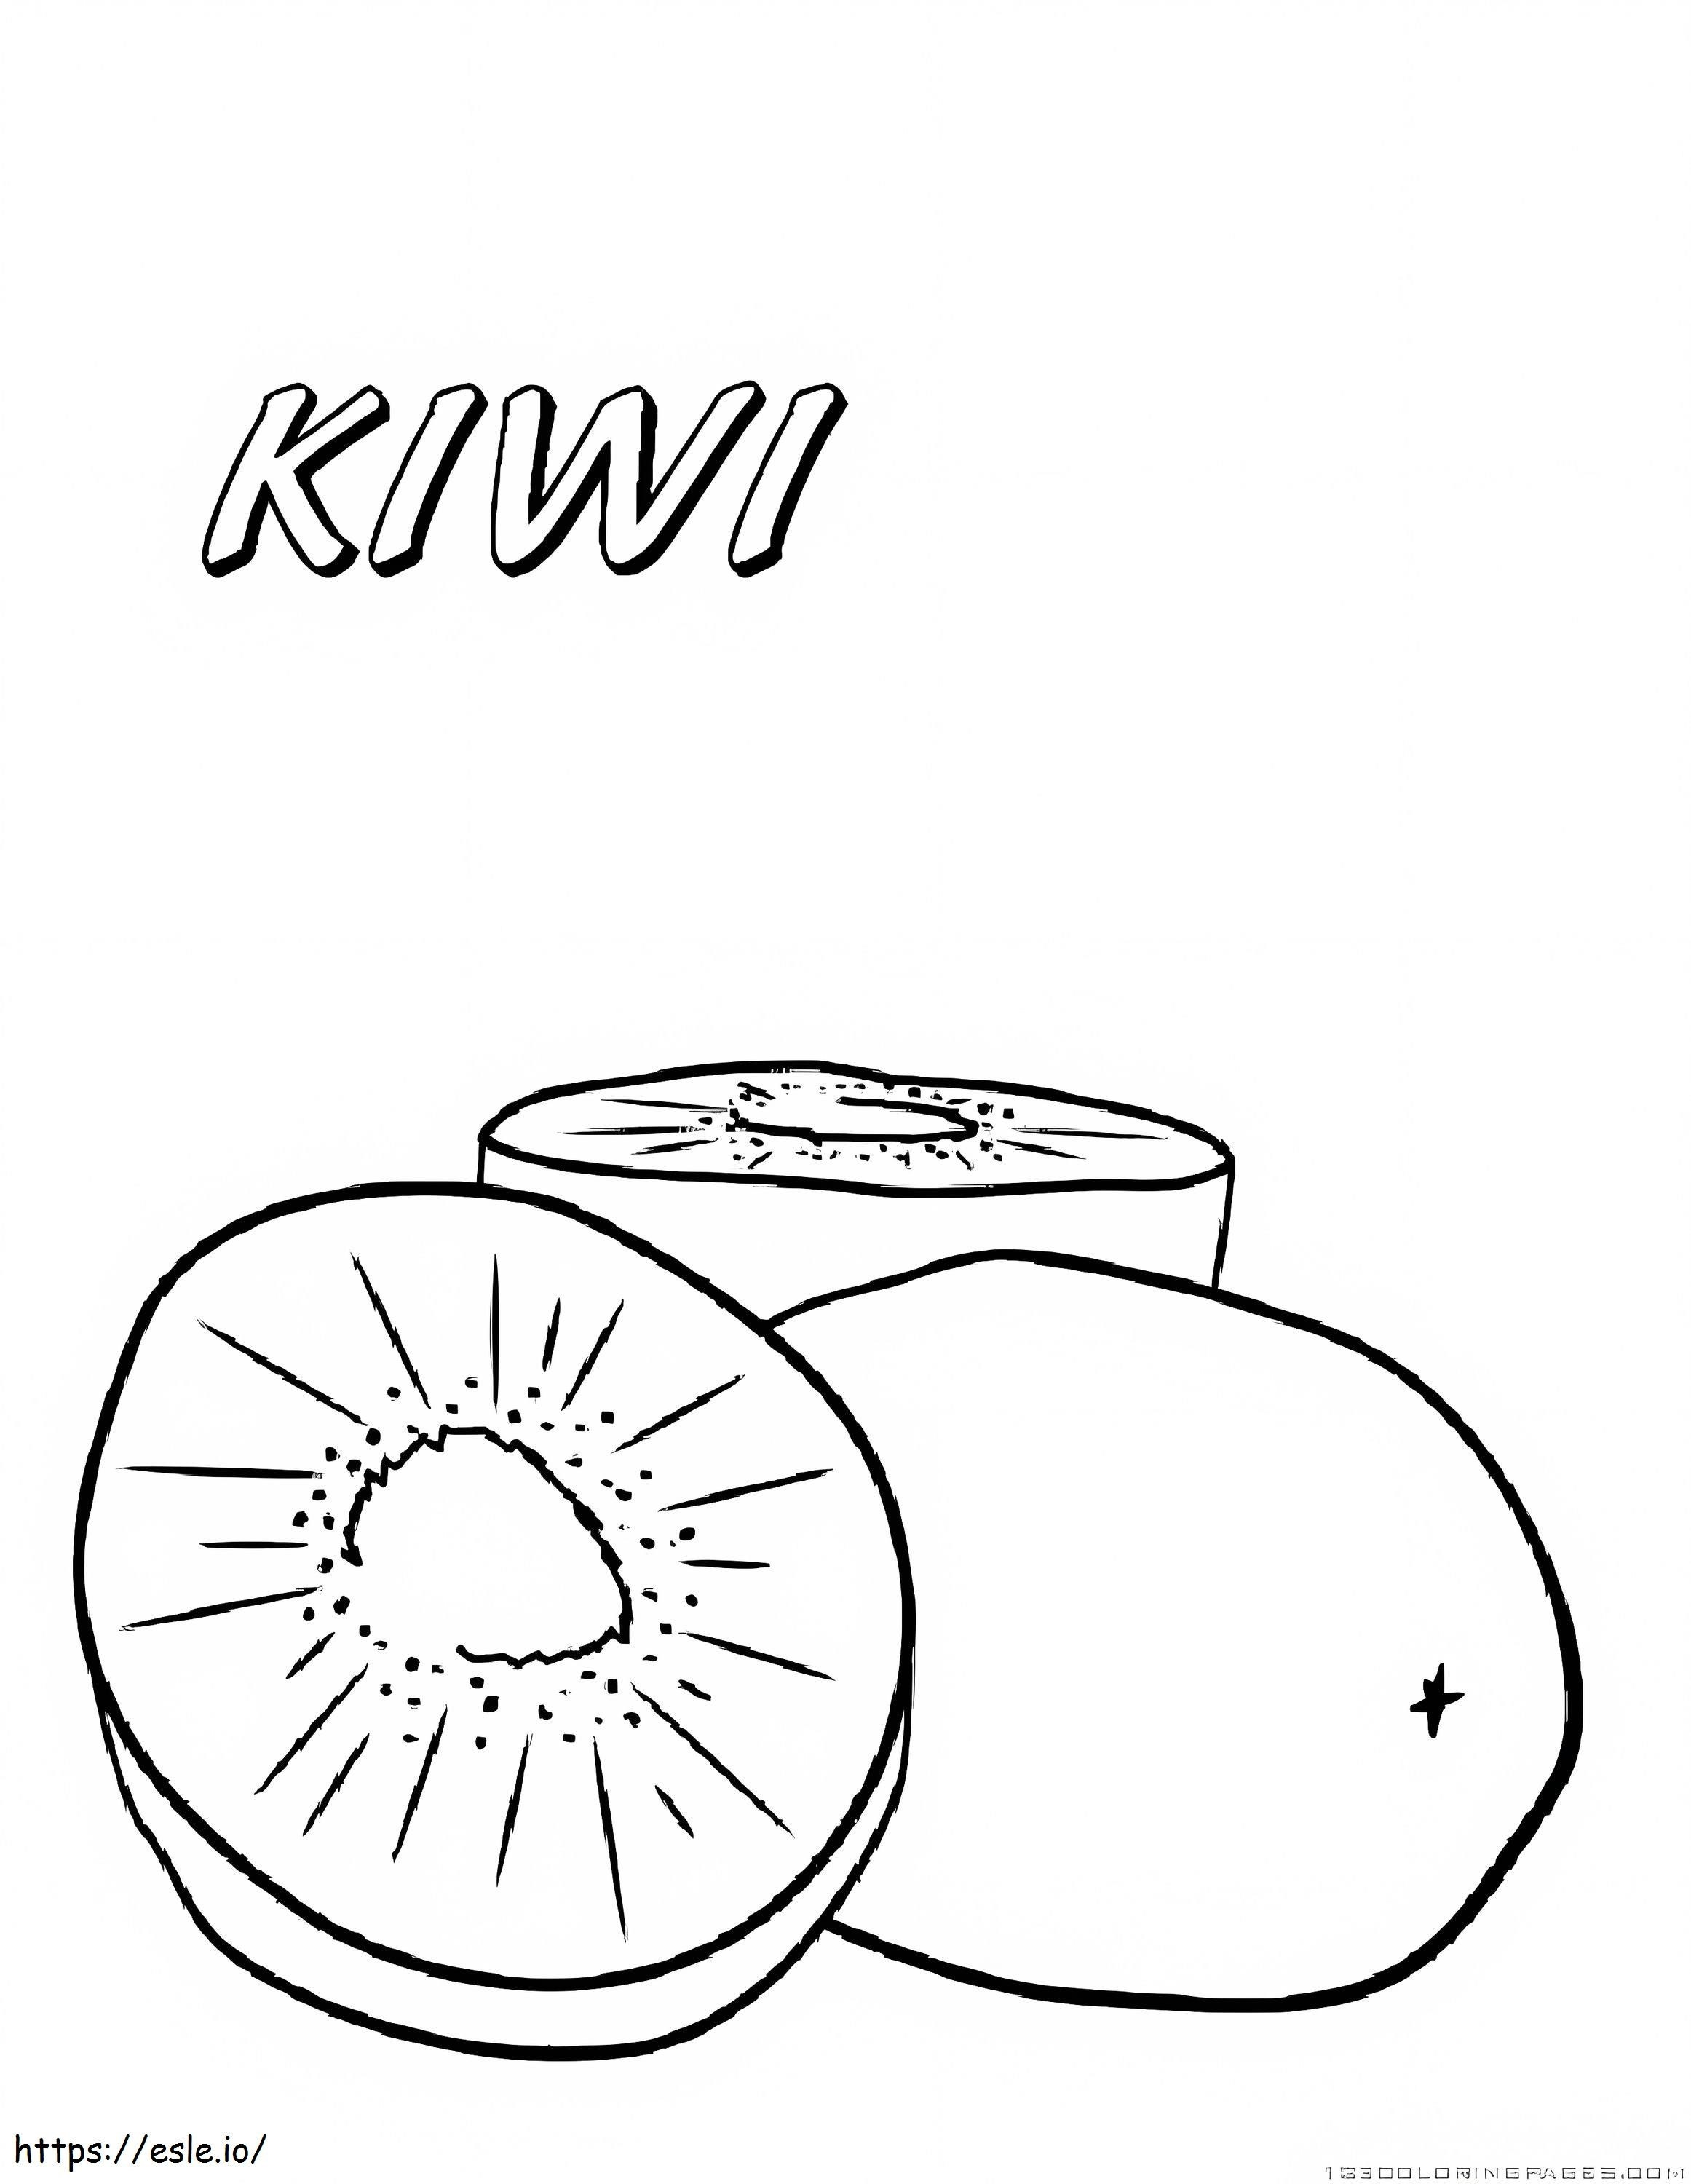 Amazing Kiwi coloring page